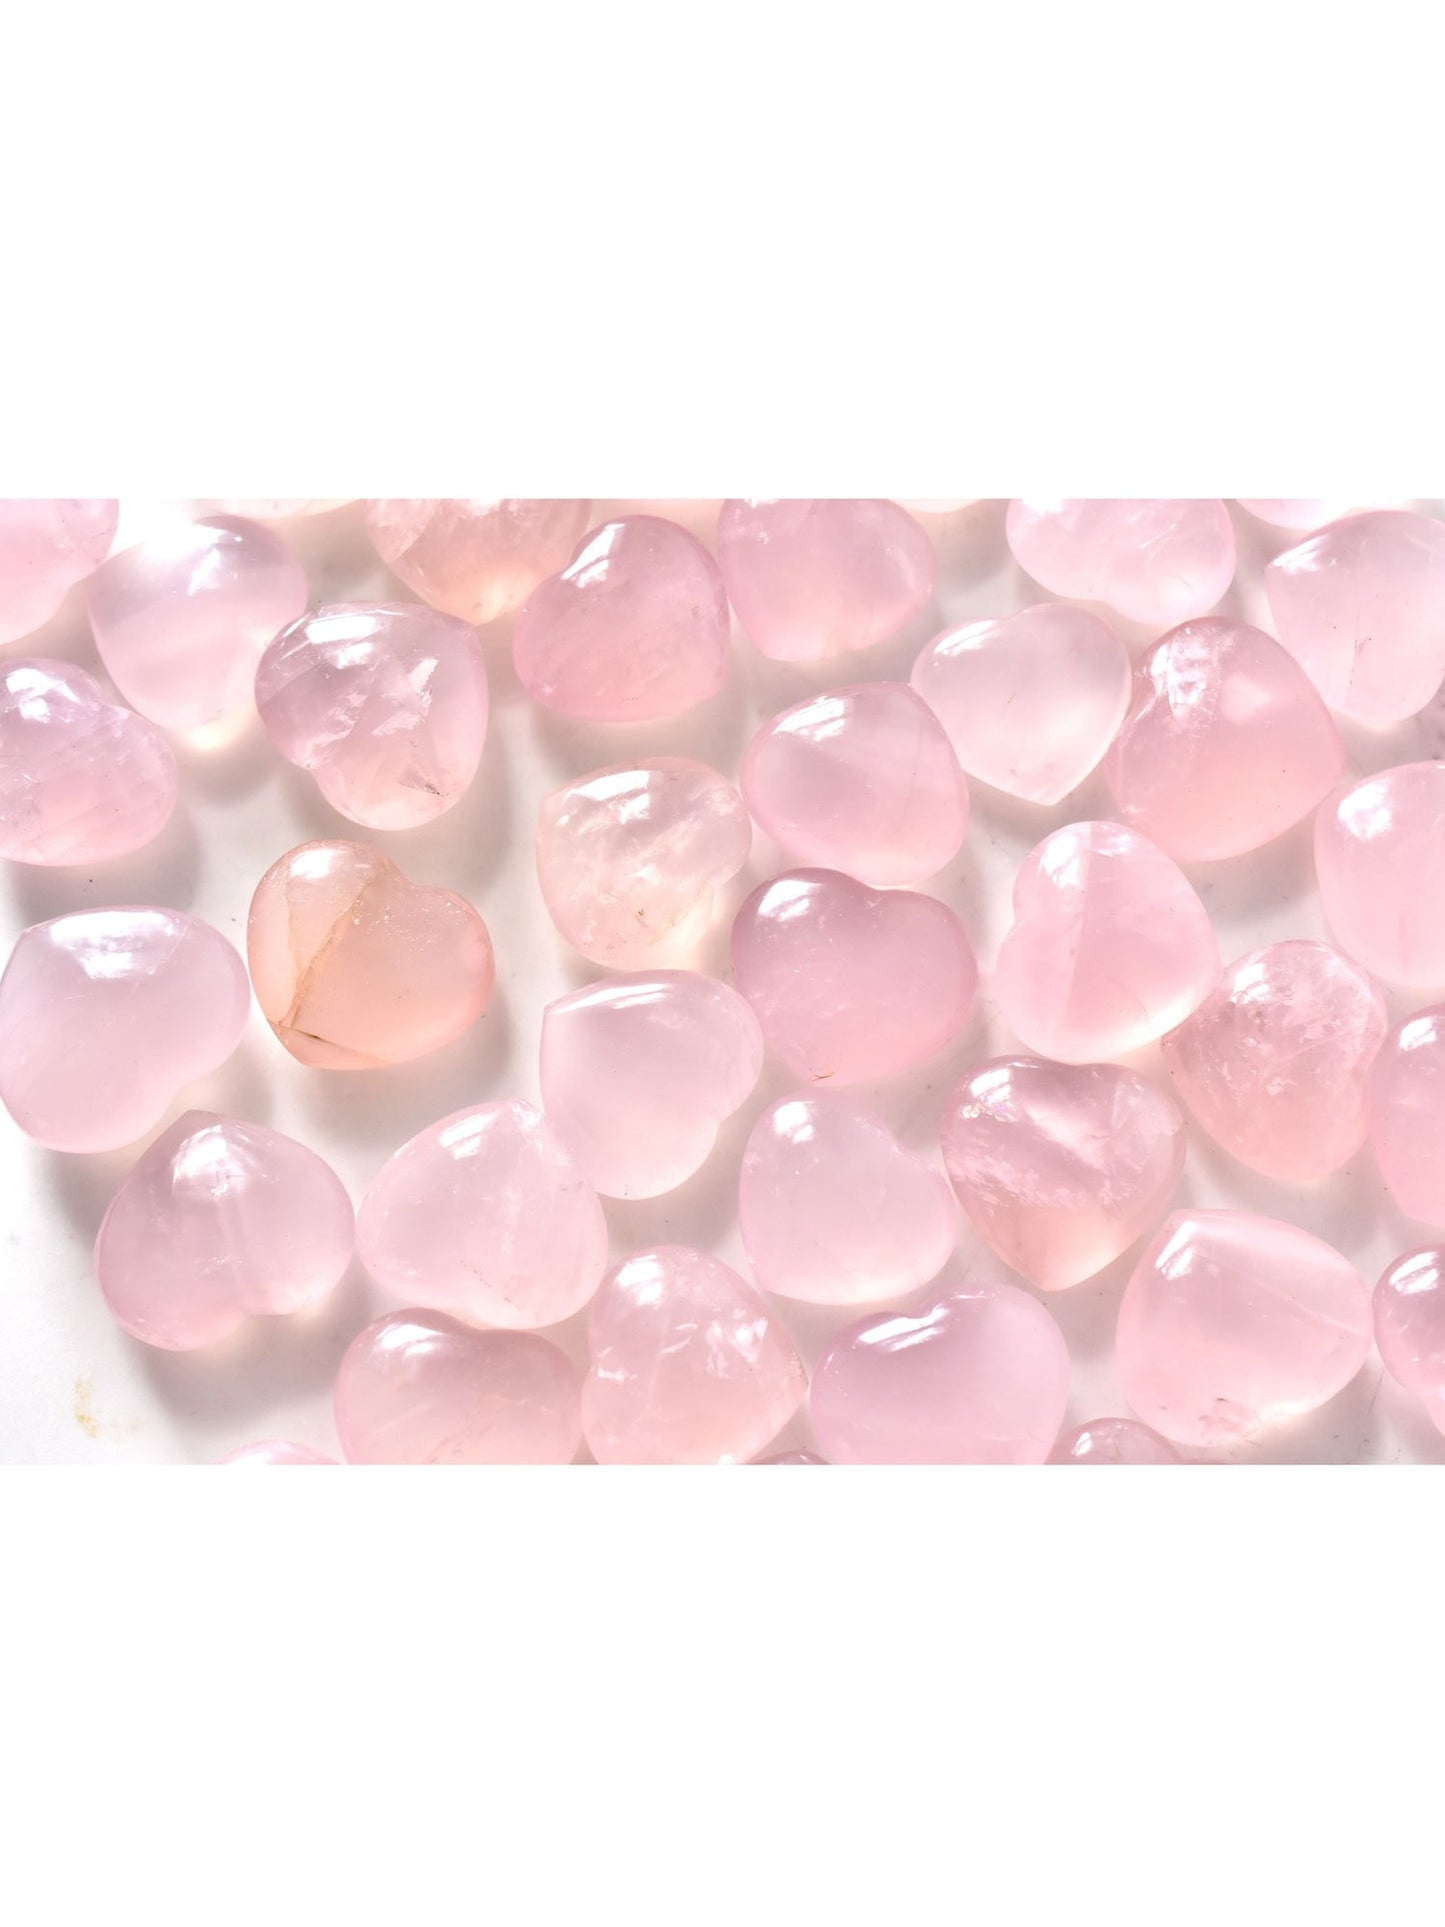 Open Heart Apothecary Rosenquarz Herz Kristalle Rosa Madagaskar Mineral